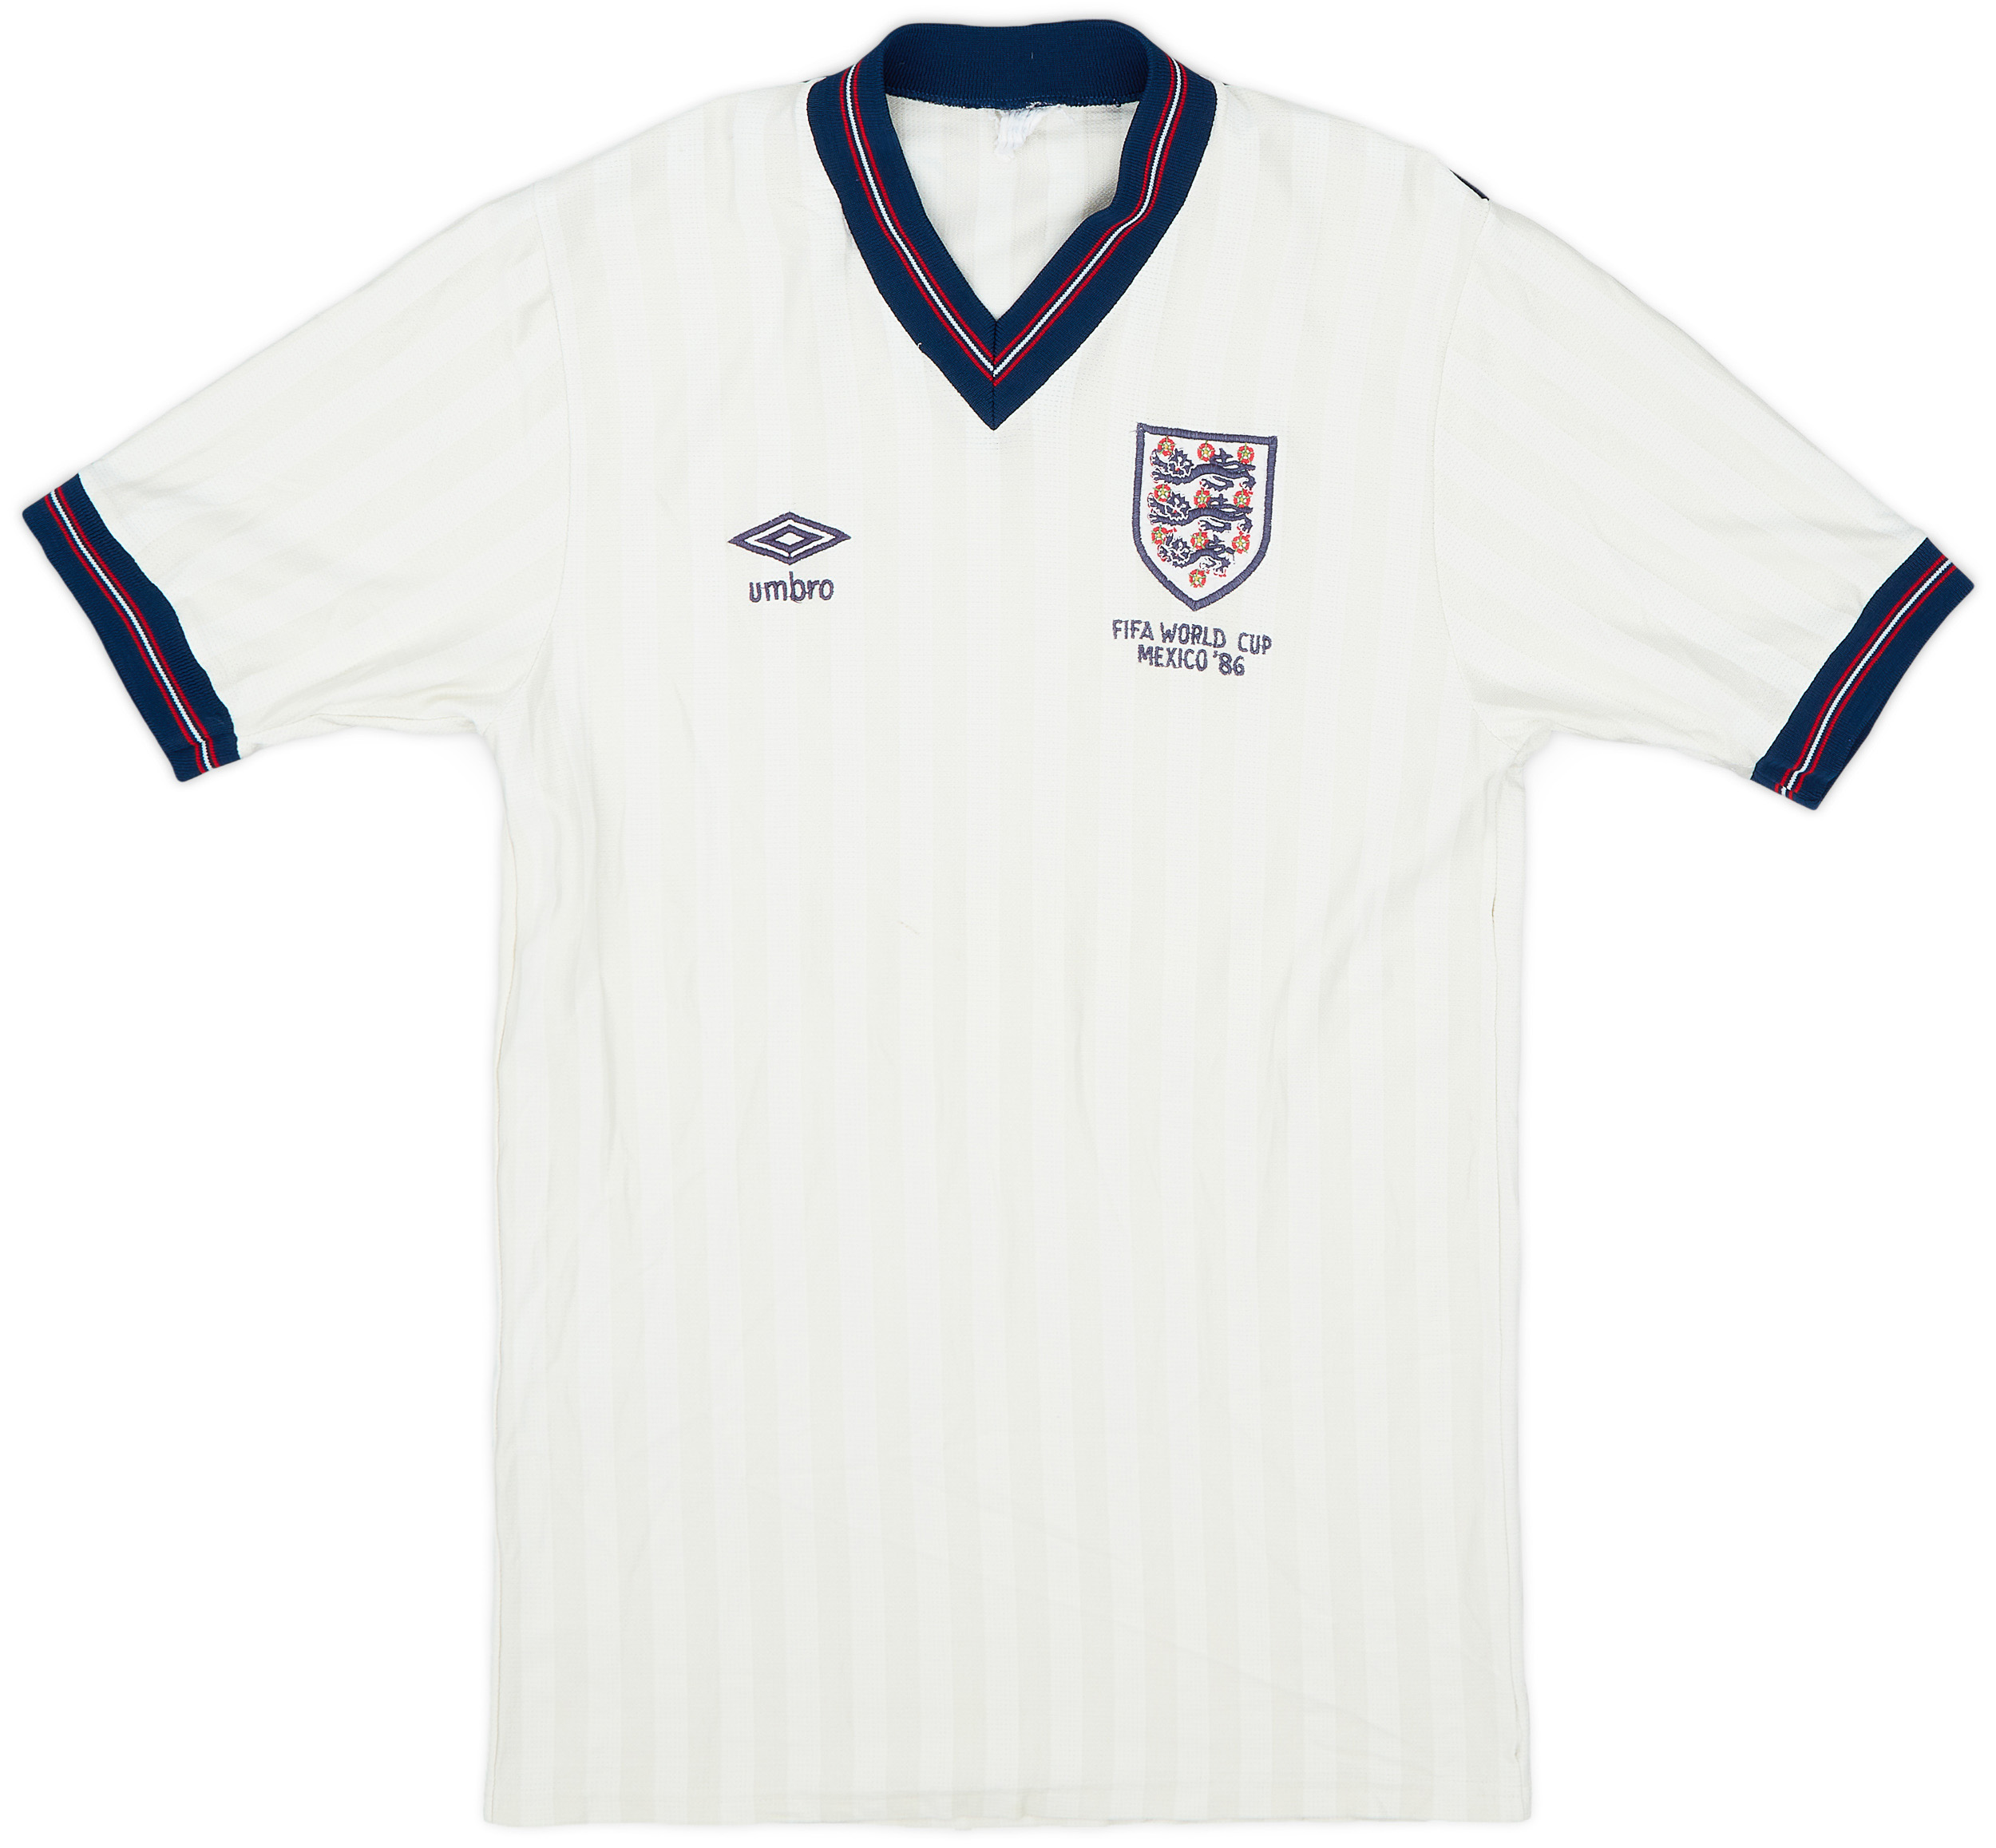 1986 England 'World Cup' Home Shirt - 8/10 - ()